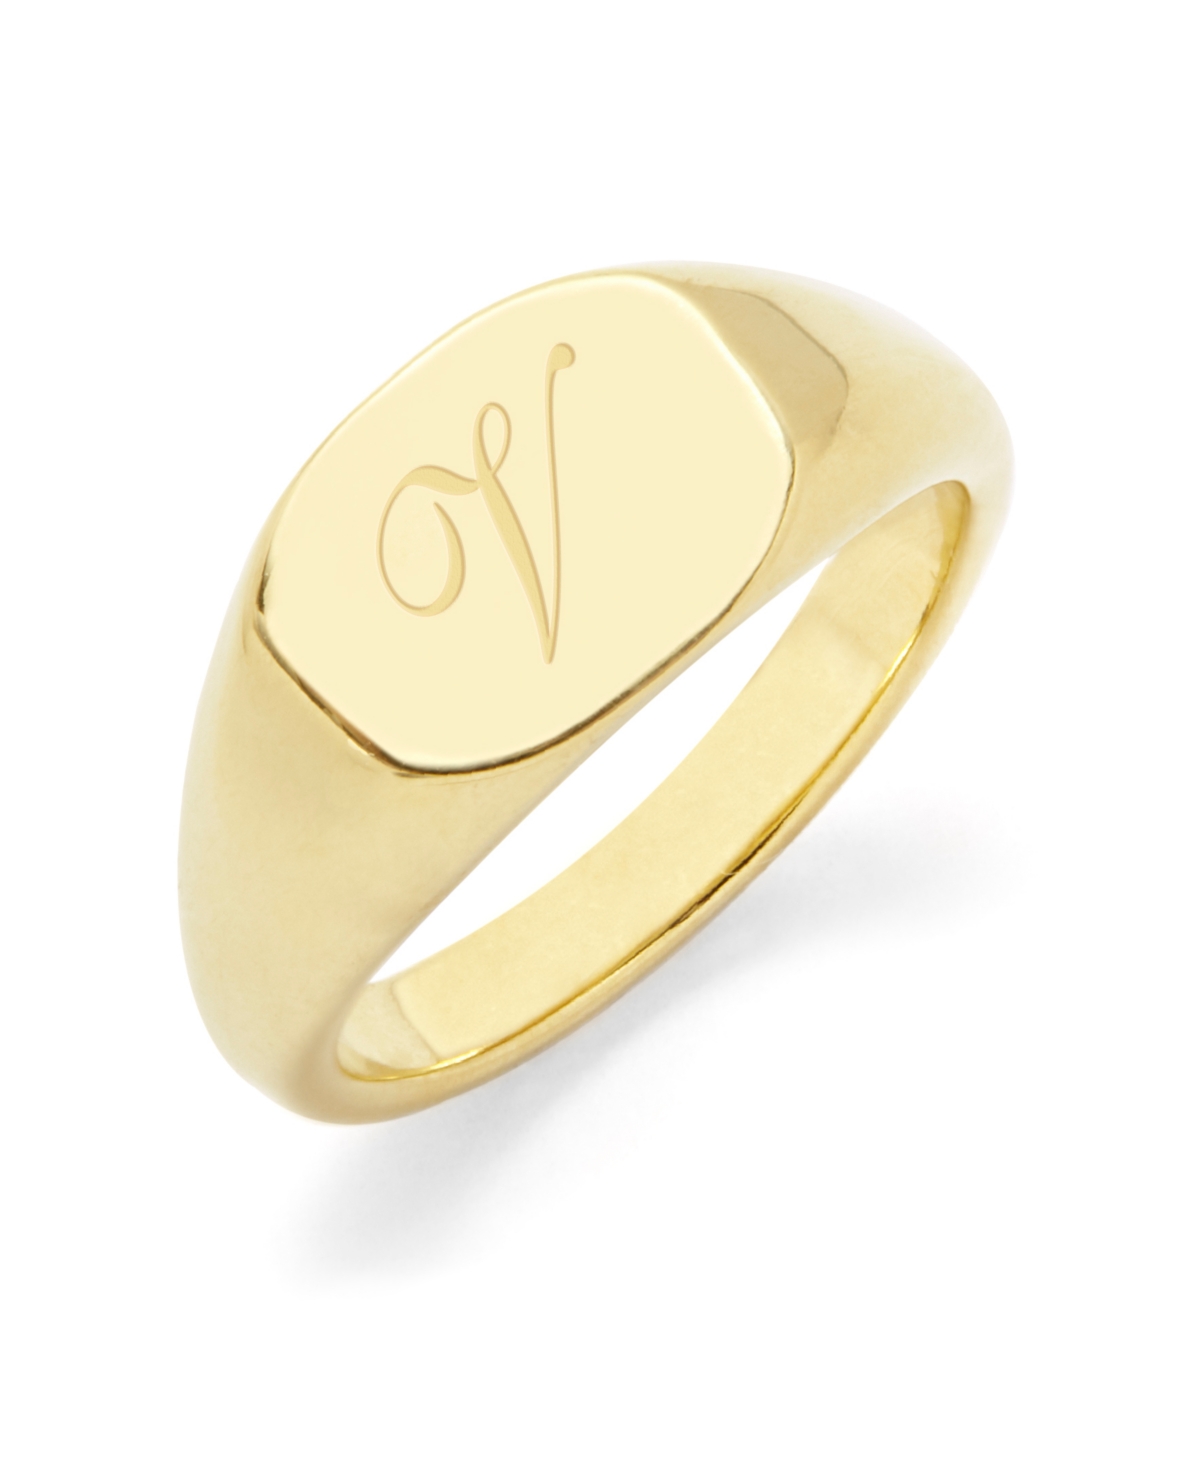 brook & york Reagan Initial Signet Gold-Plated Ring